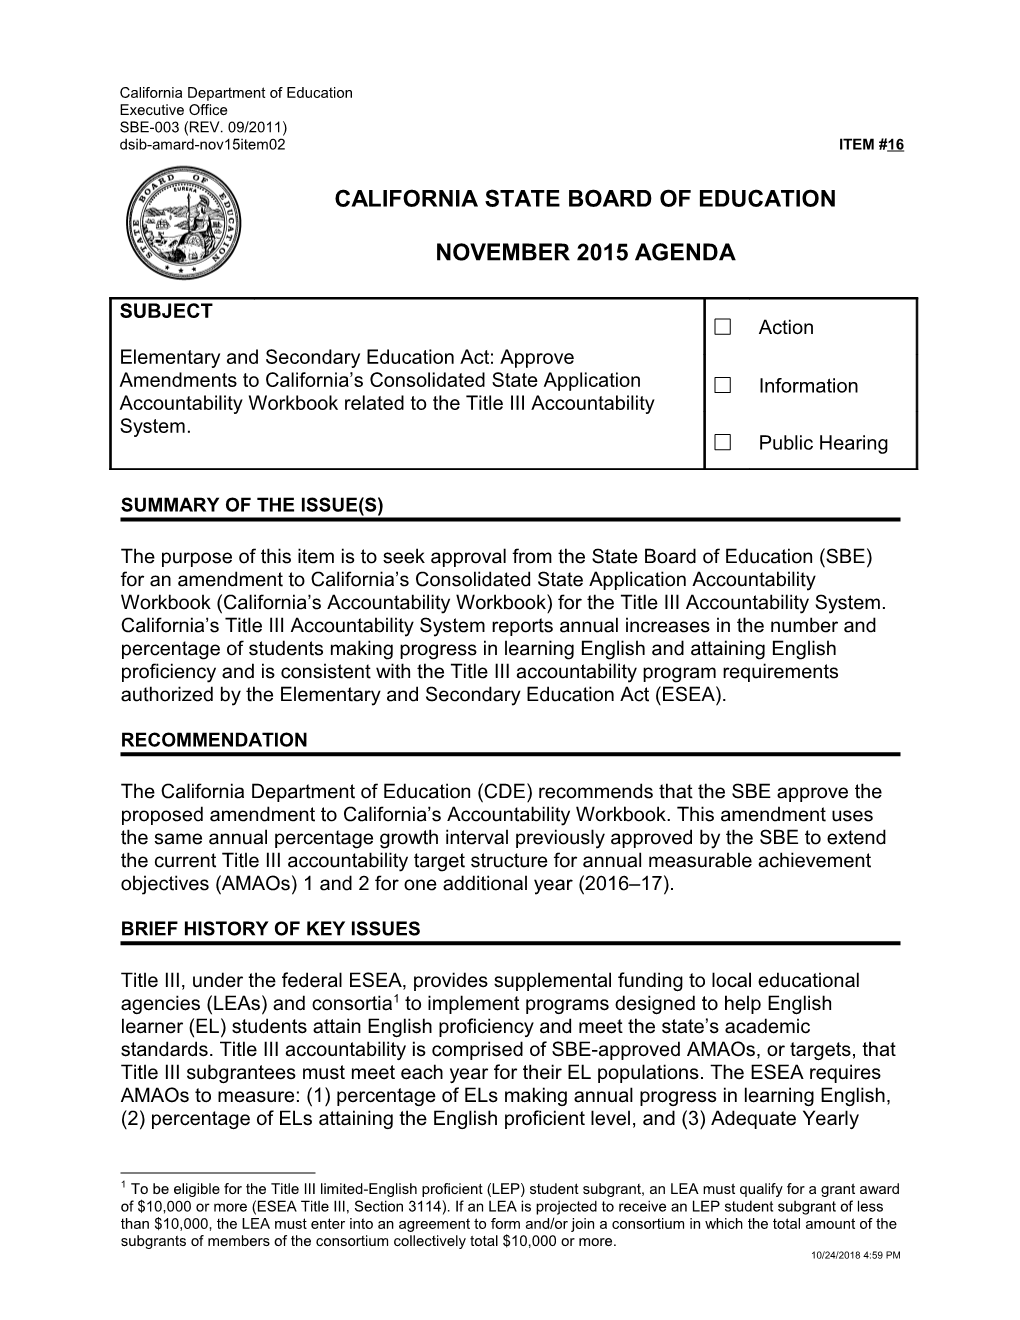 November 2015 Agenda Item 16 - Meeting Agendas (CA State Board of Education)